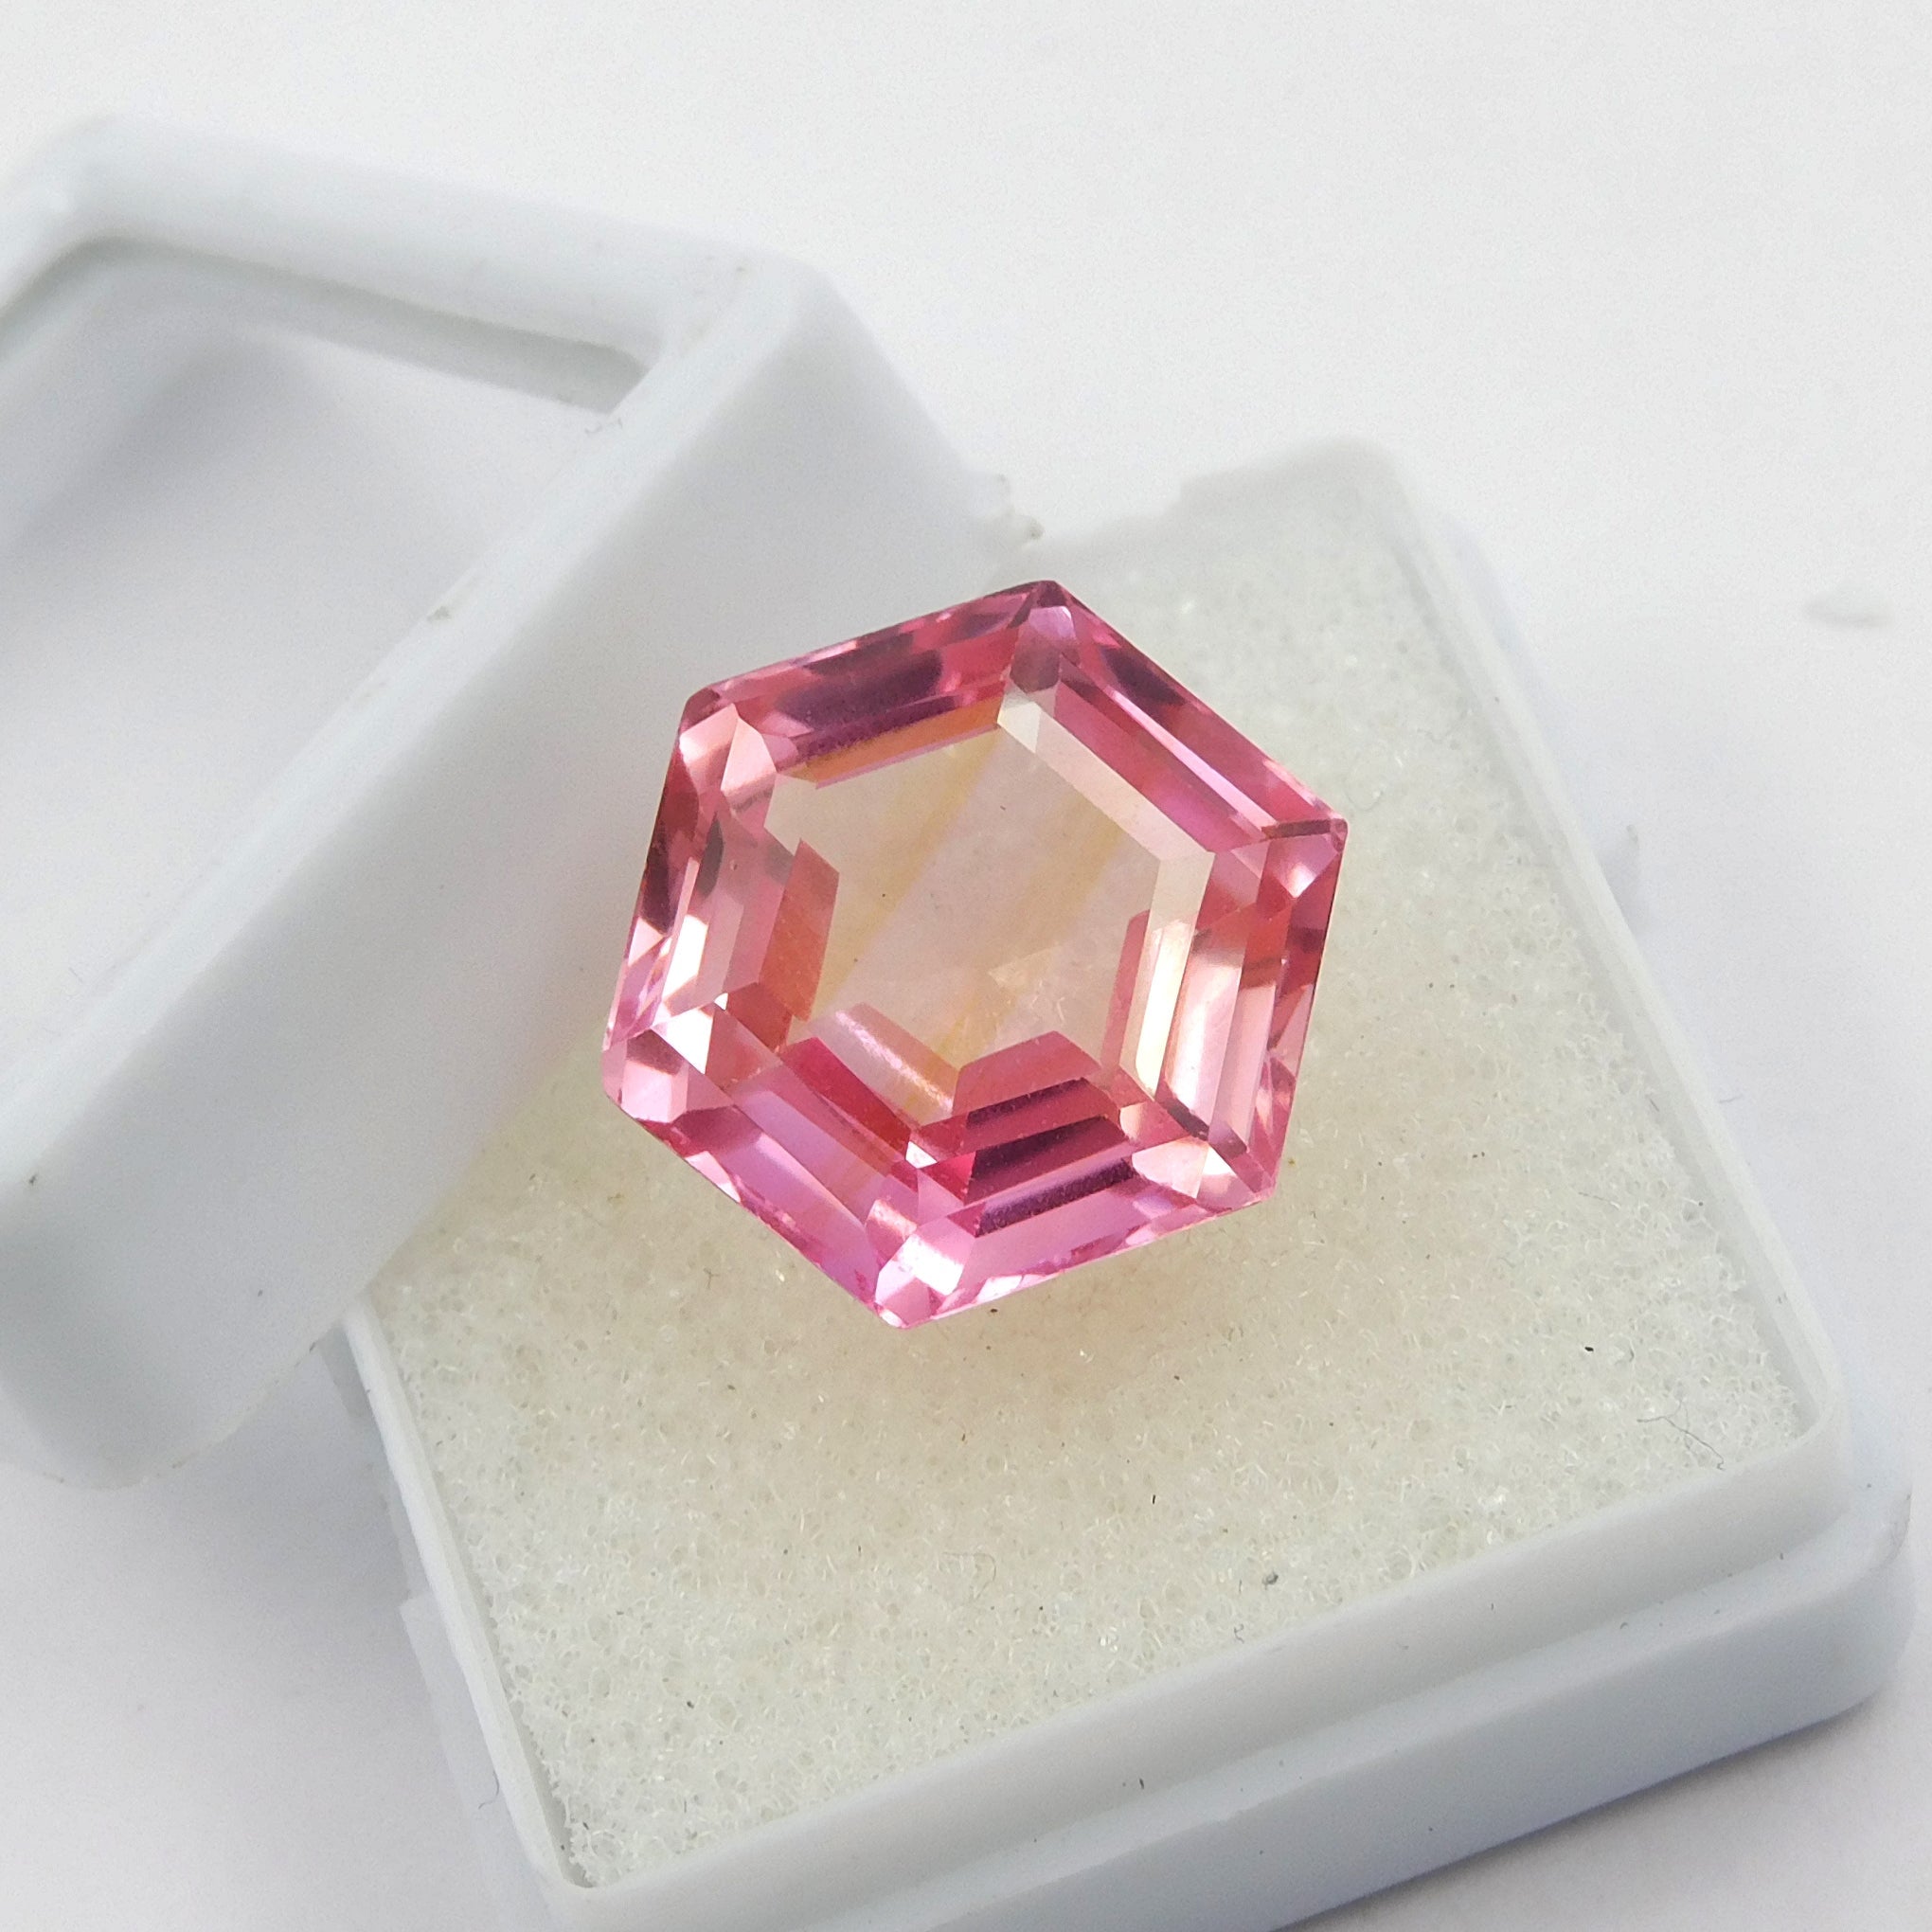 "Ring Size Sapphire Gemstone "Certified Natural 7.84 Carat Padparadscha Sapphire Fancy Shape Loose Gemstone | Sri Lanka's Sapphire | Best Price